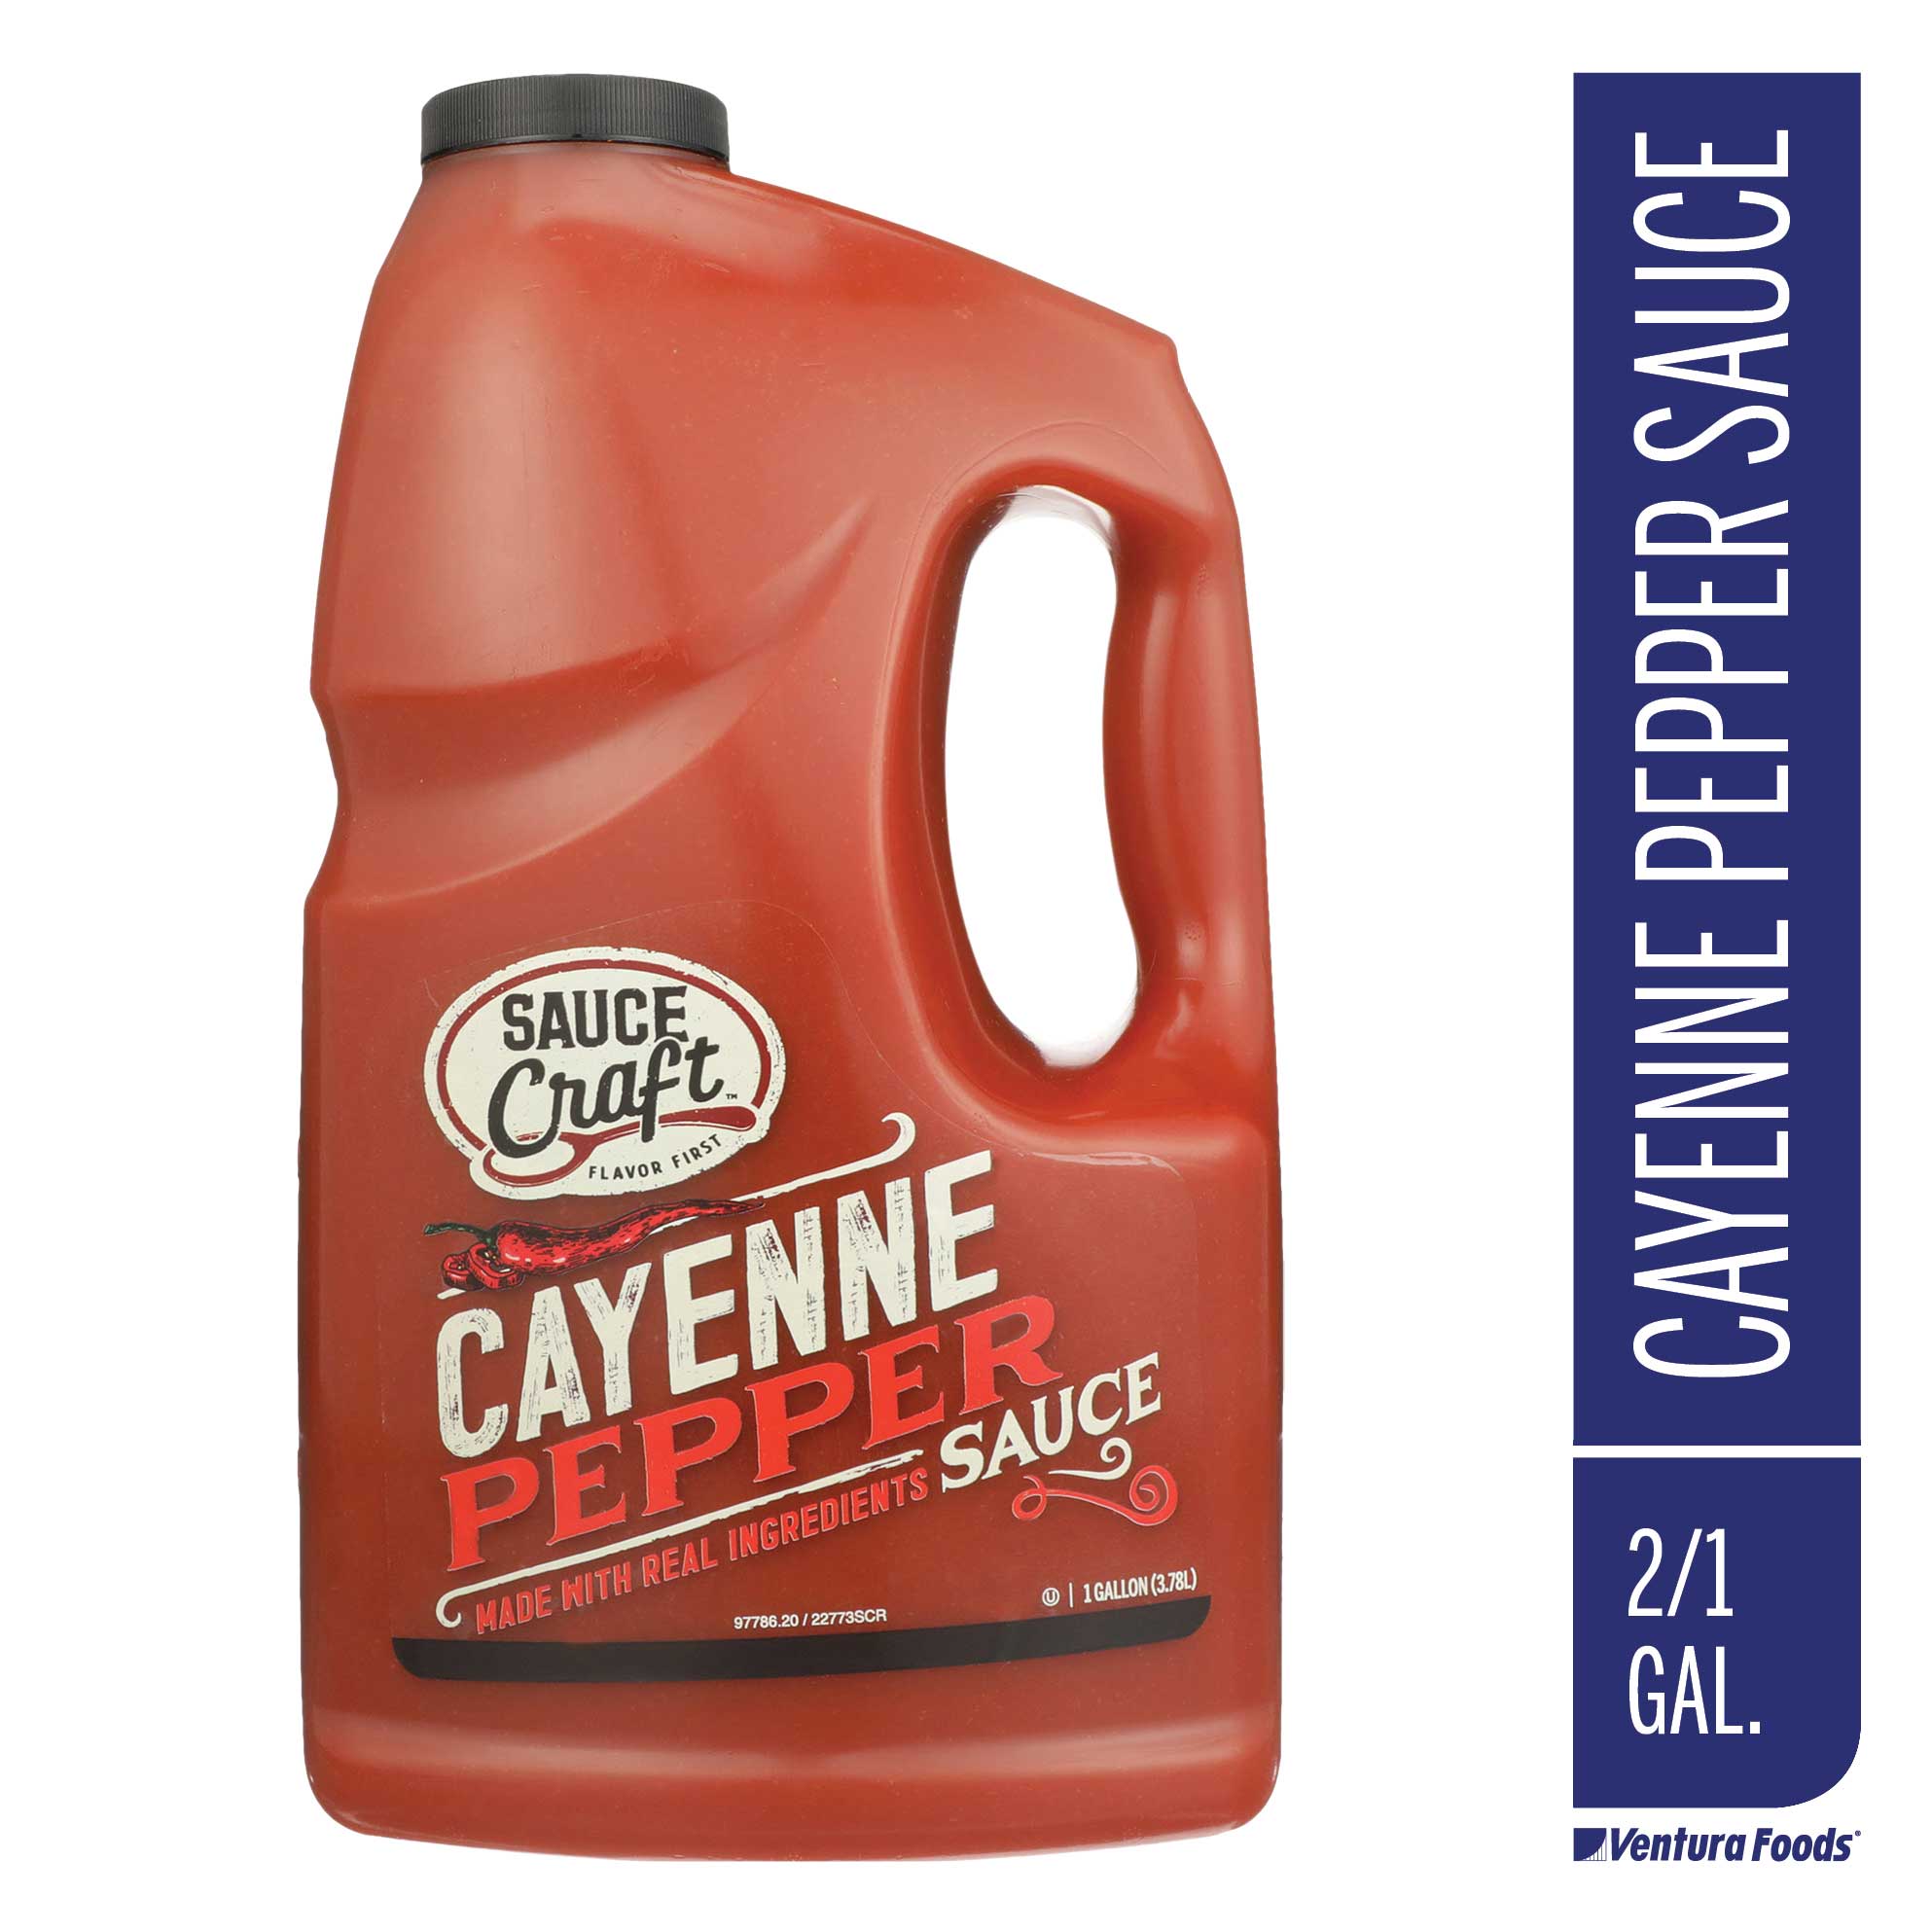 Sauce Craft Cayenne Pepper Sauce, 1 Gallon -- 2 per case